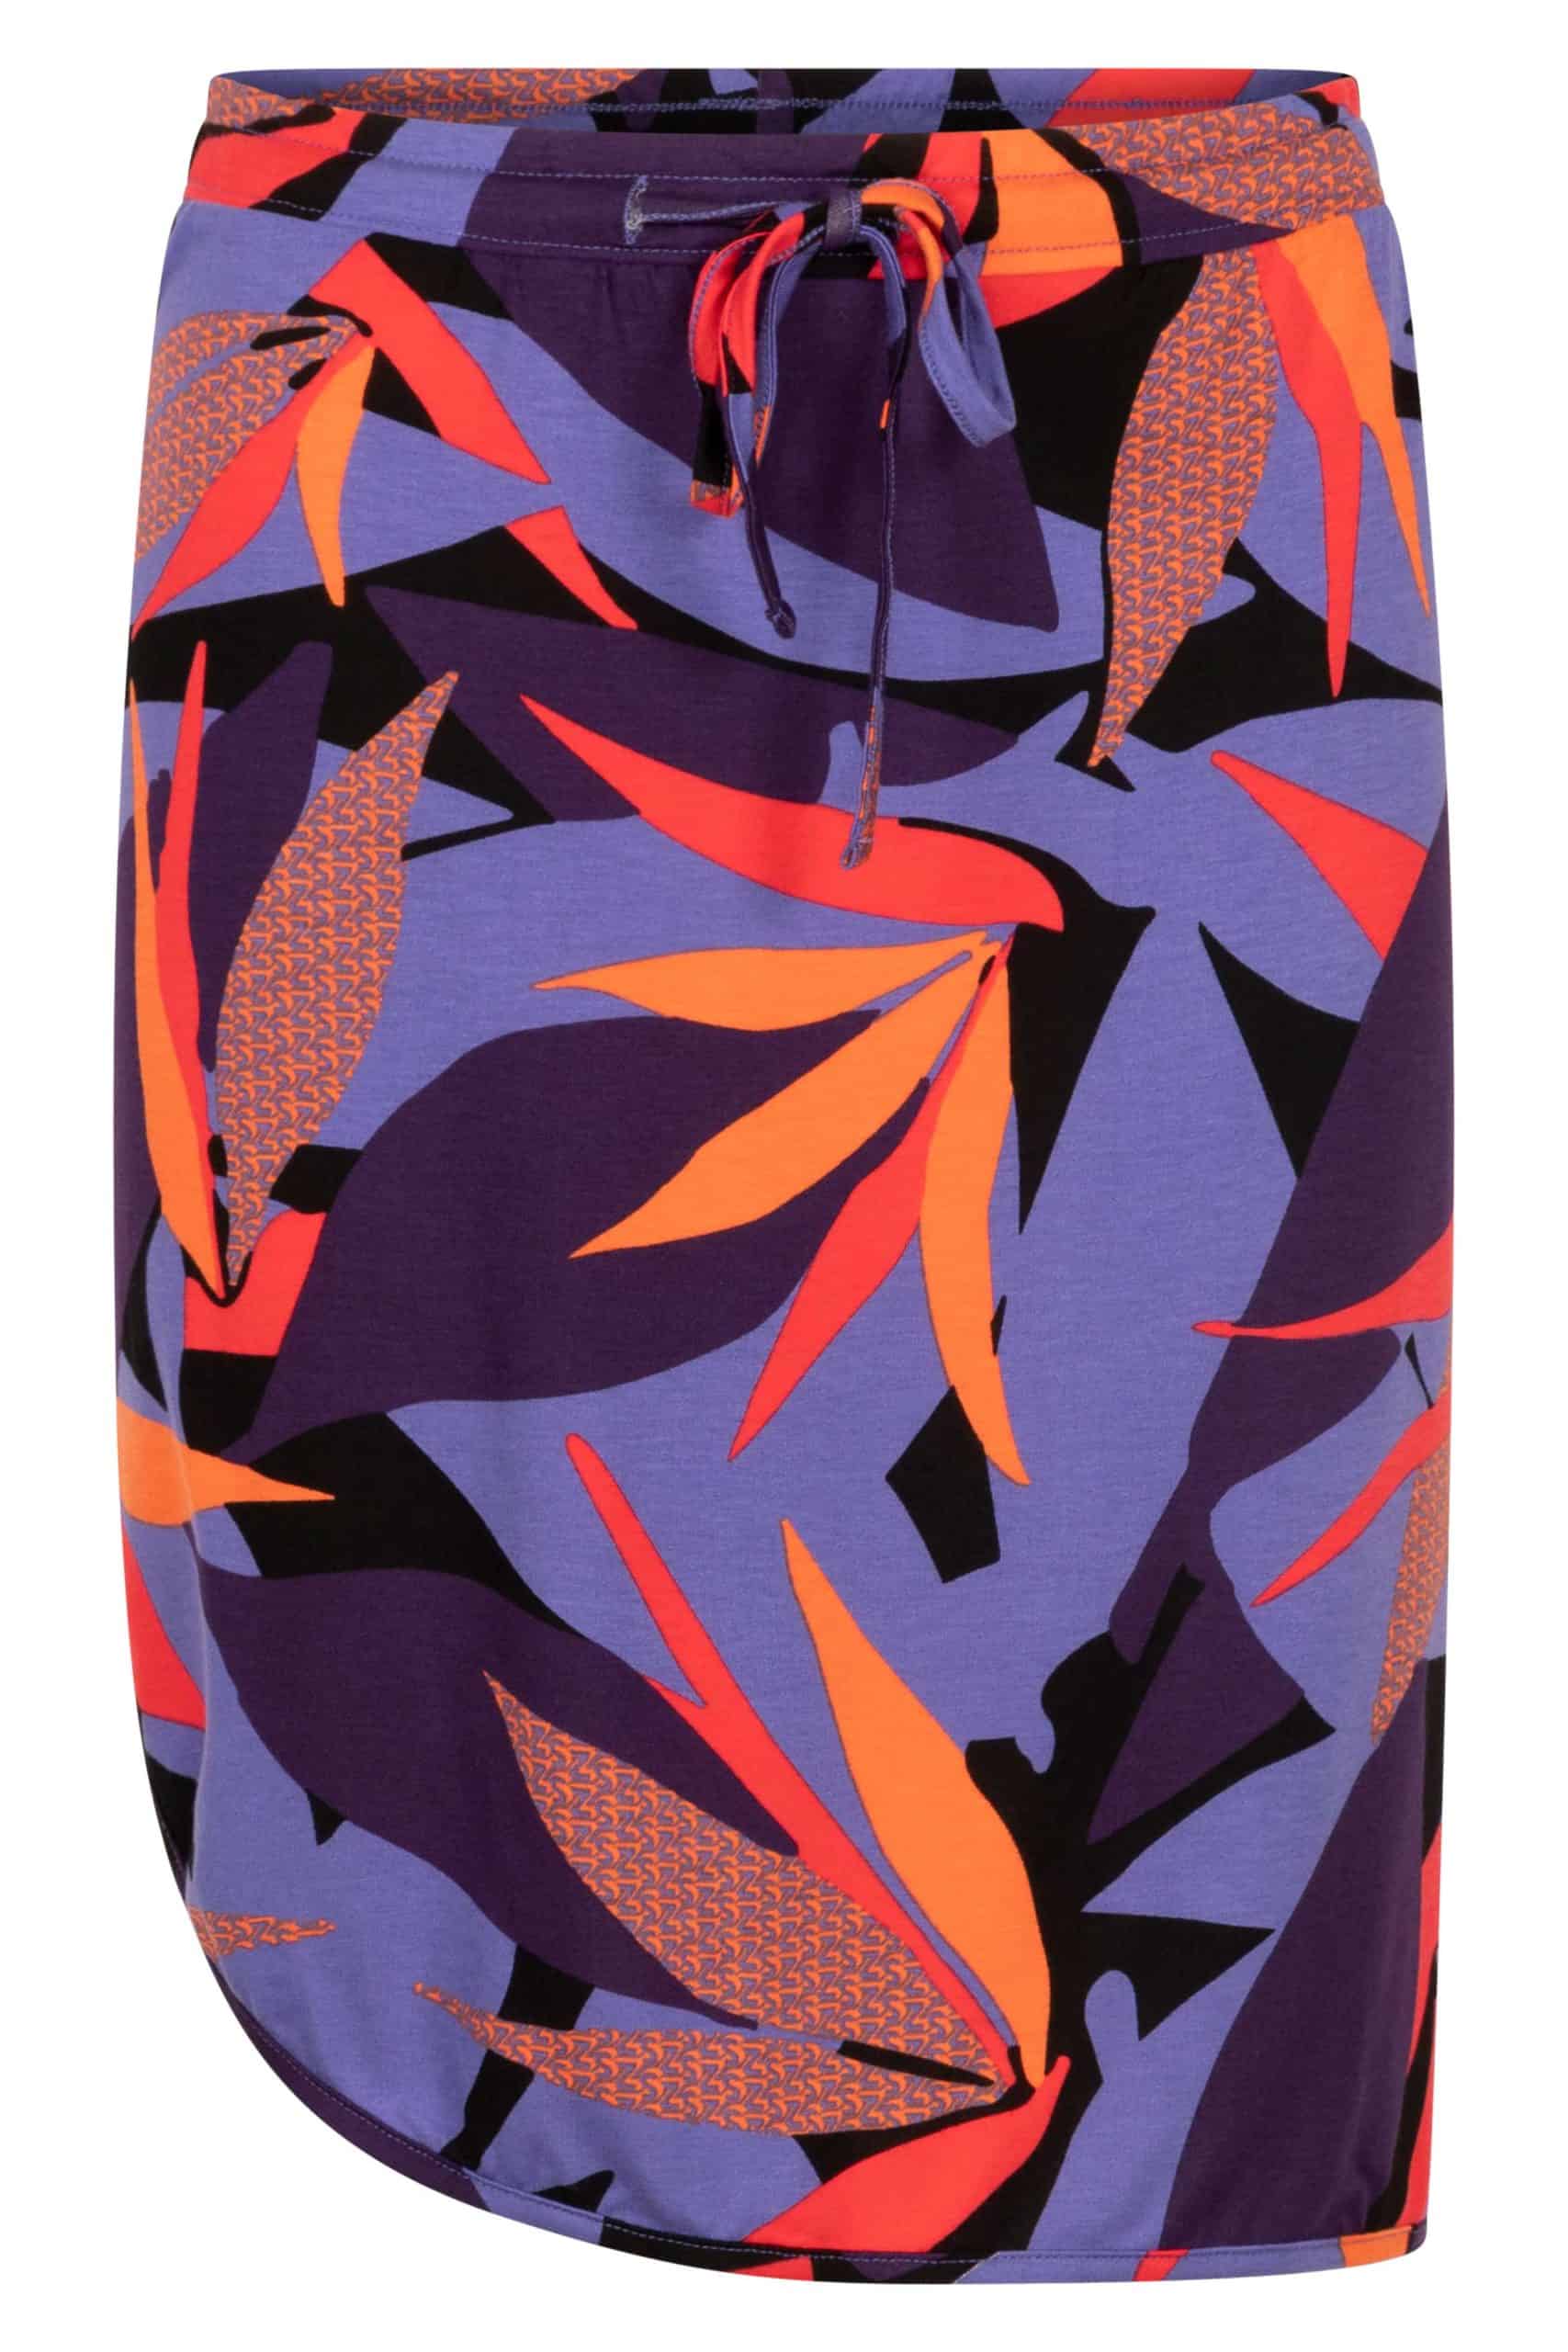 Zoso 223 Sunny Allover Printed Skirt Purple